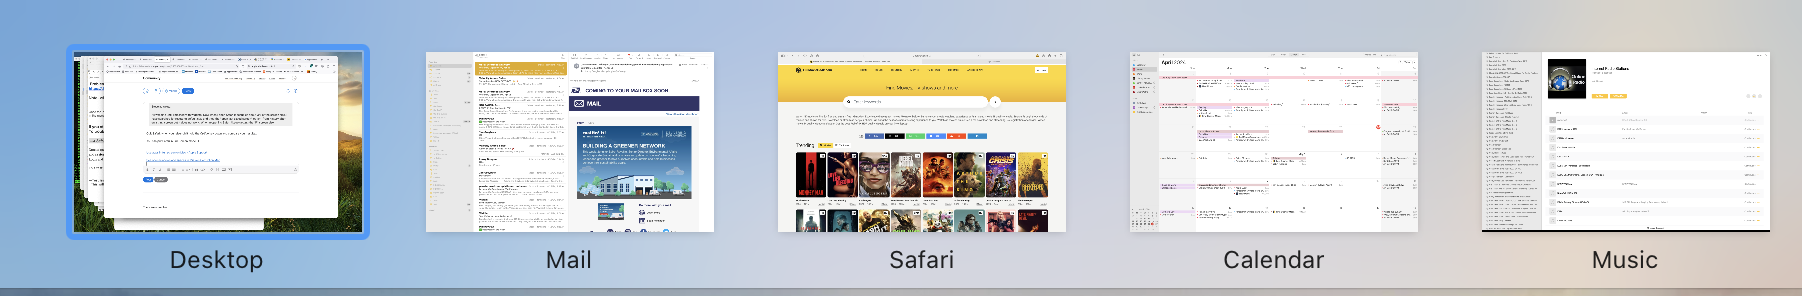 ipad email open safari full screen